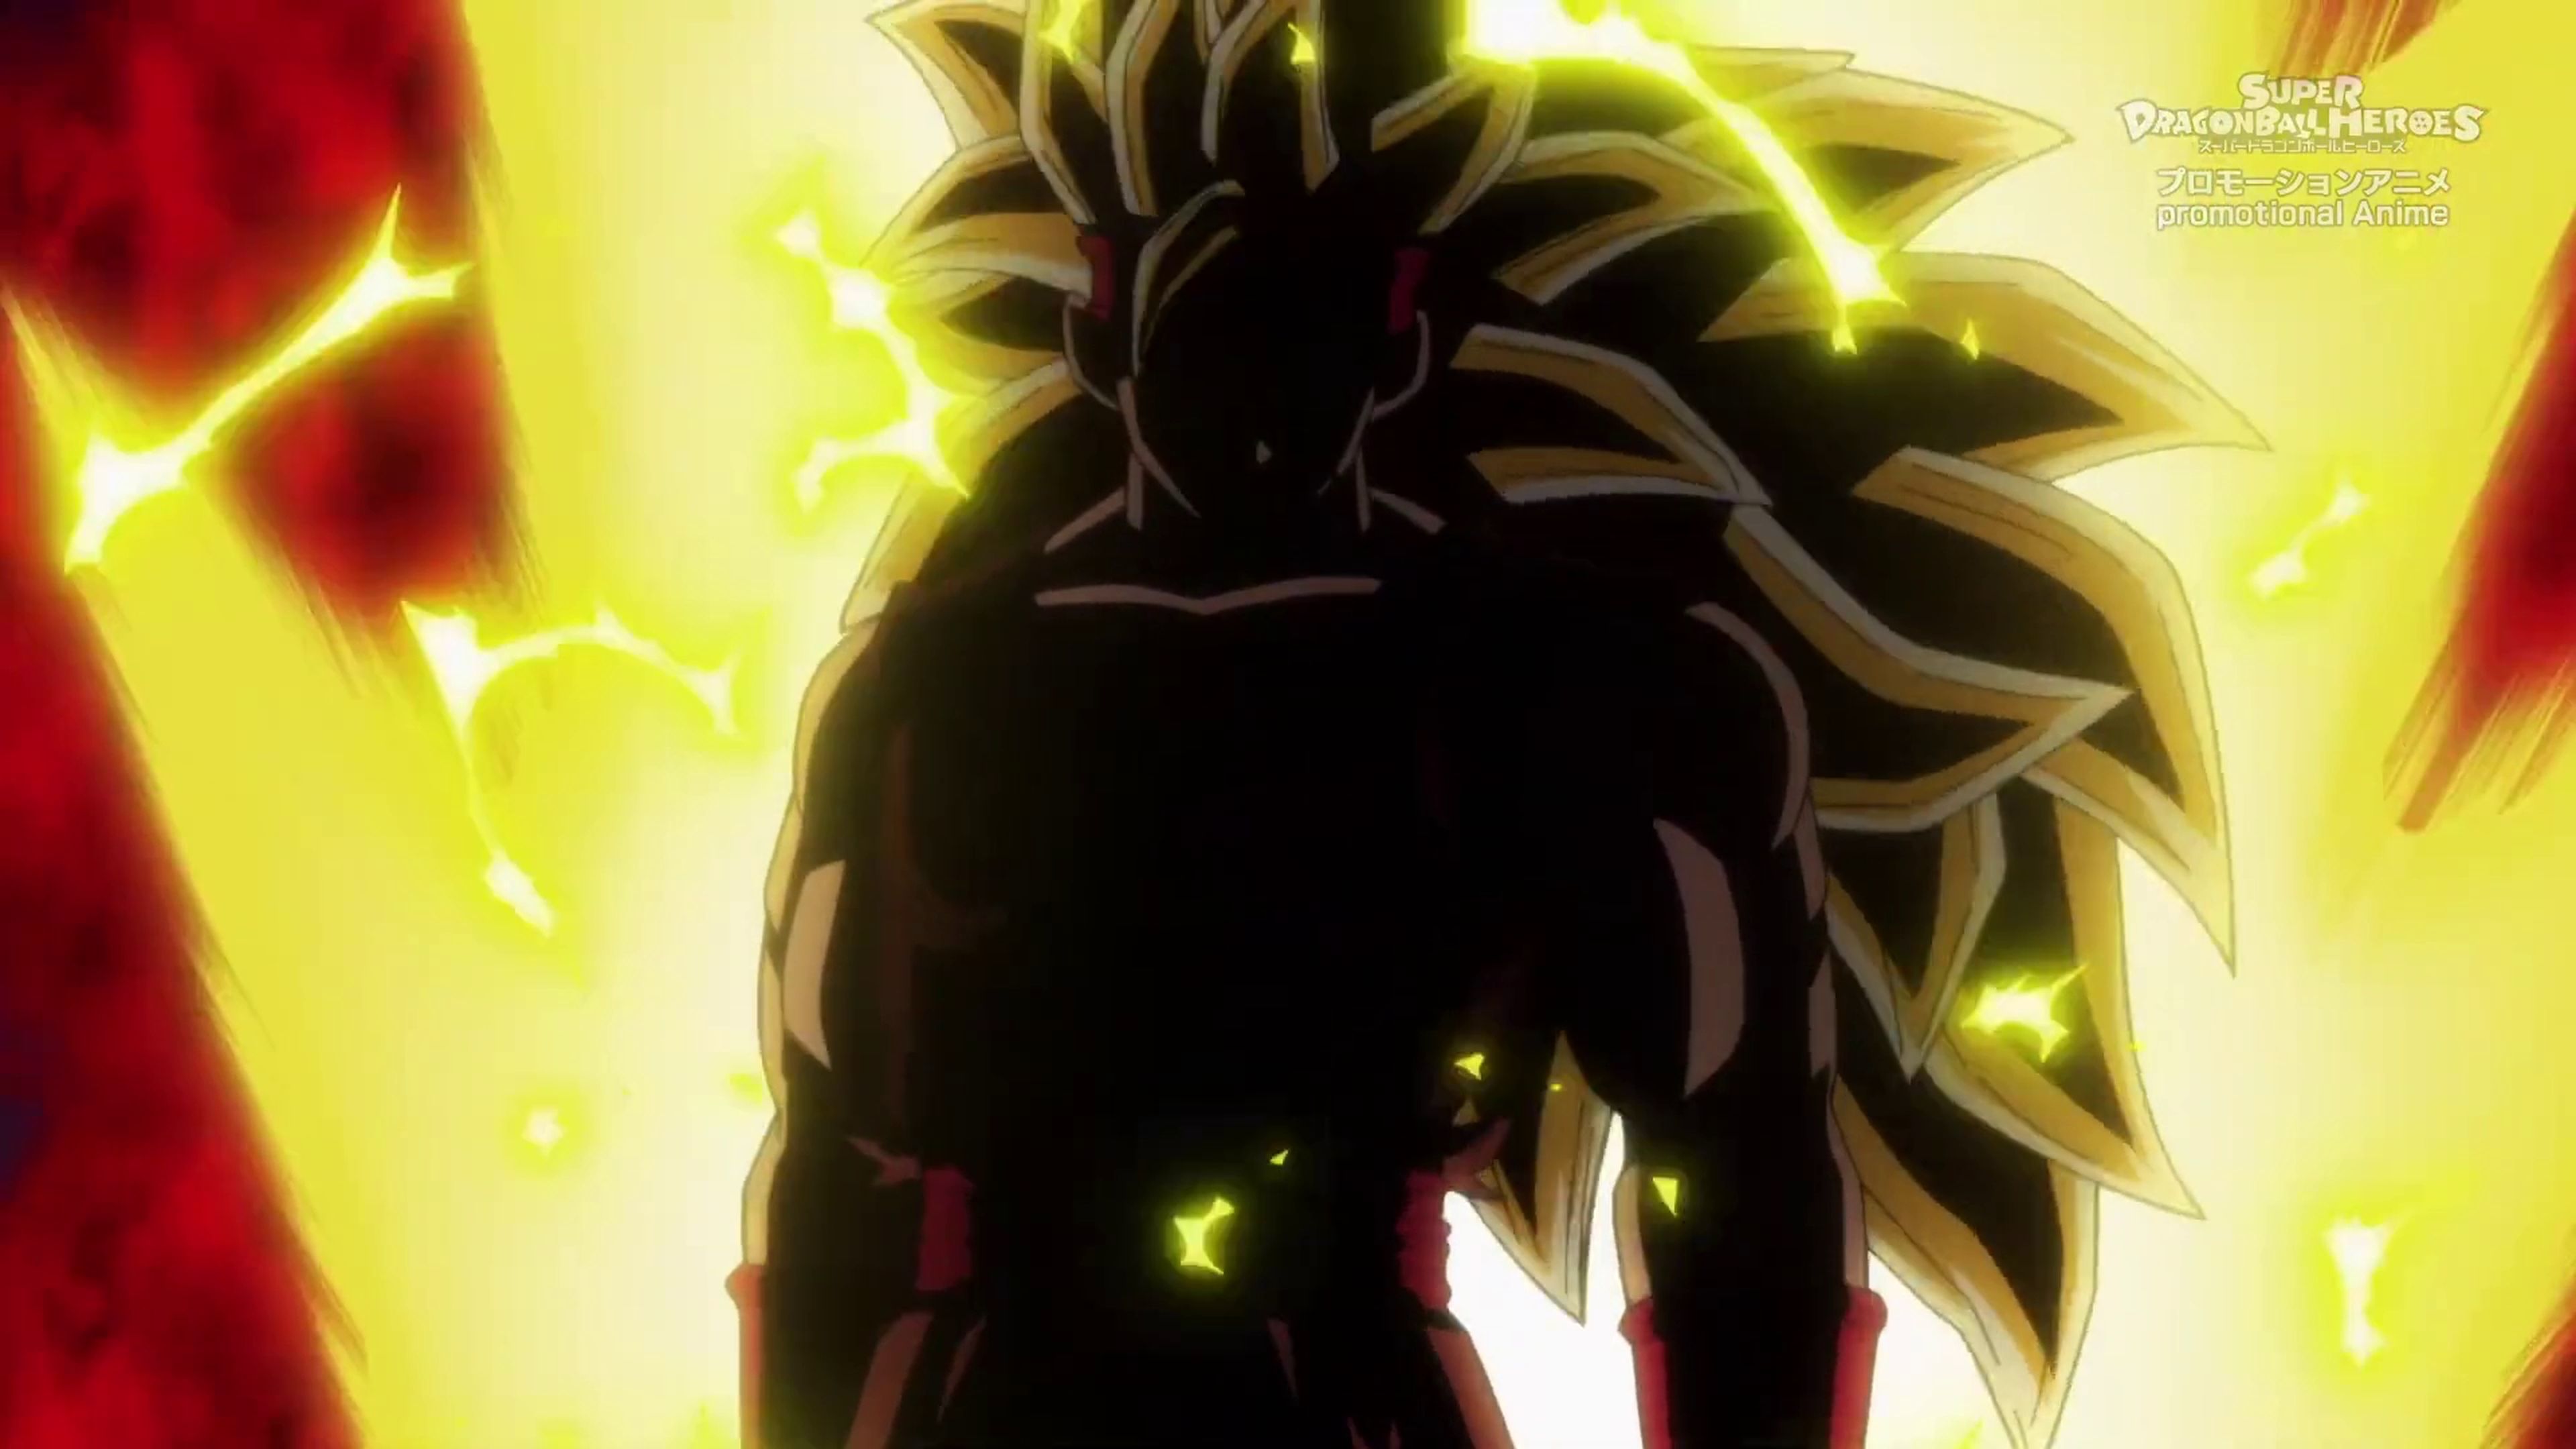 Dragon Ball - Goku y Bardock por fin se encontrarán en persona en un episodio anime oficial. ¿Estás preparado?